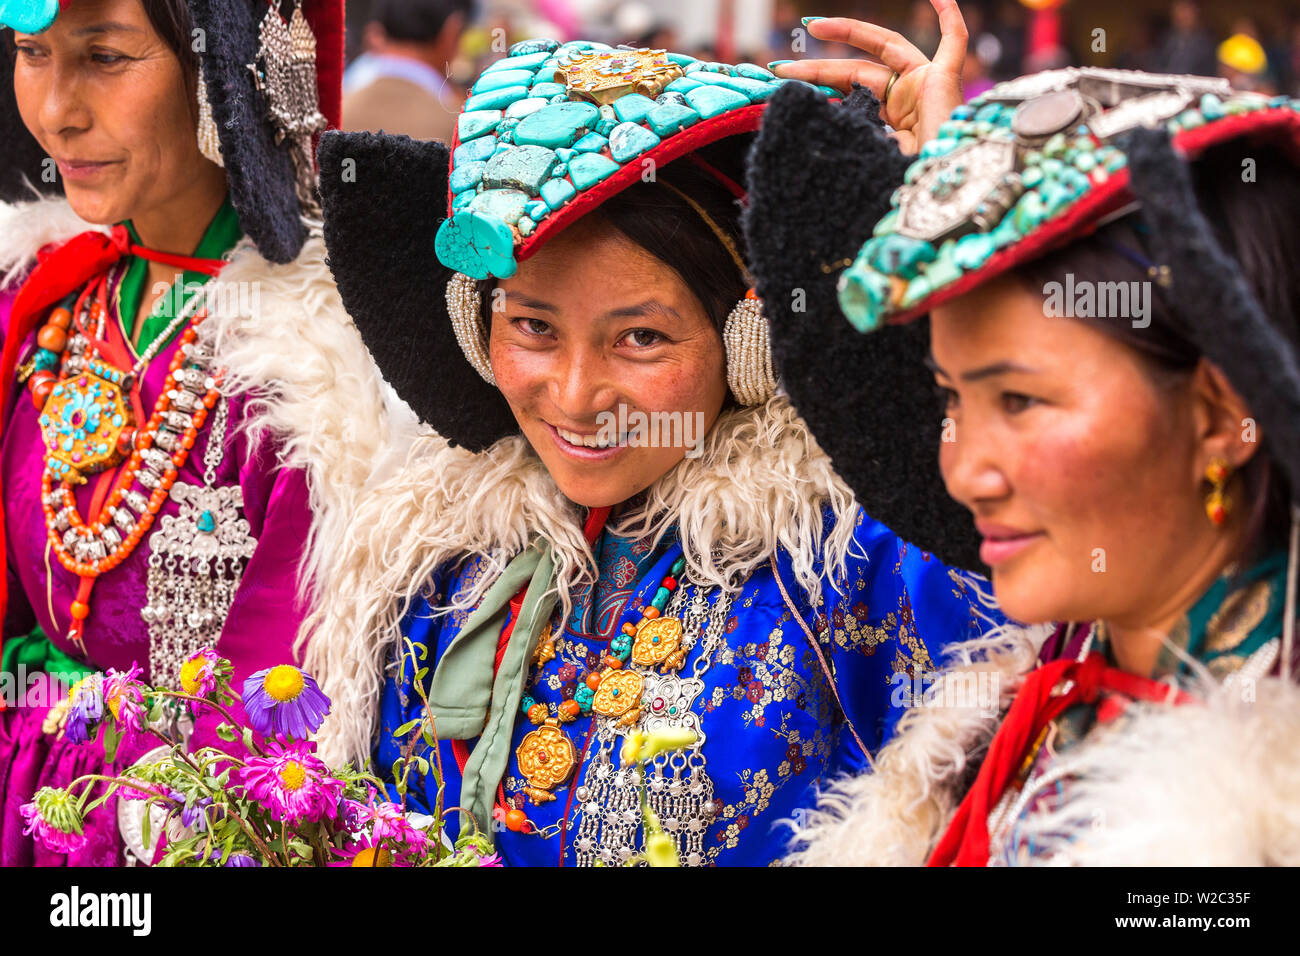 Ladakhi women in traditional clothing with turquoise head dress Ladakh India Stock Photo